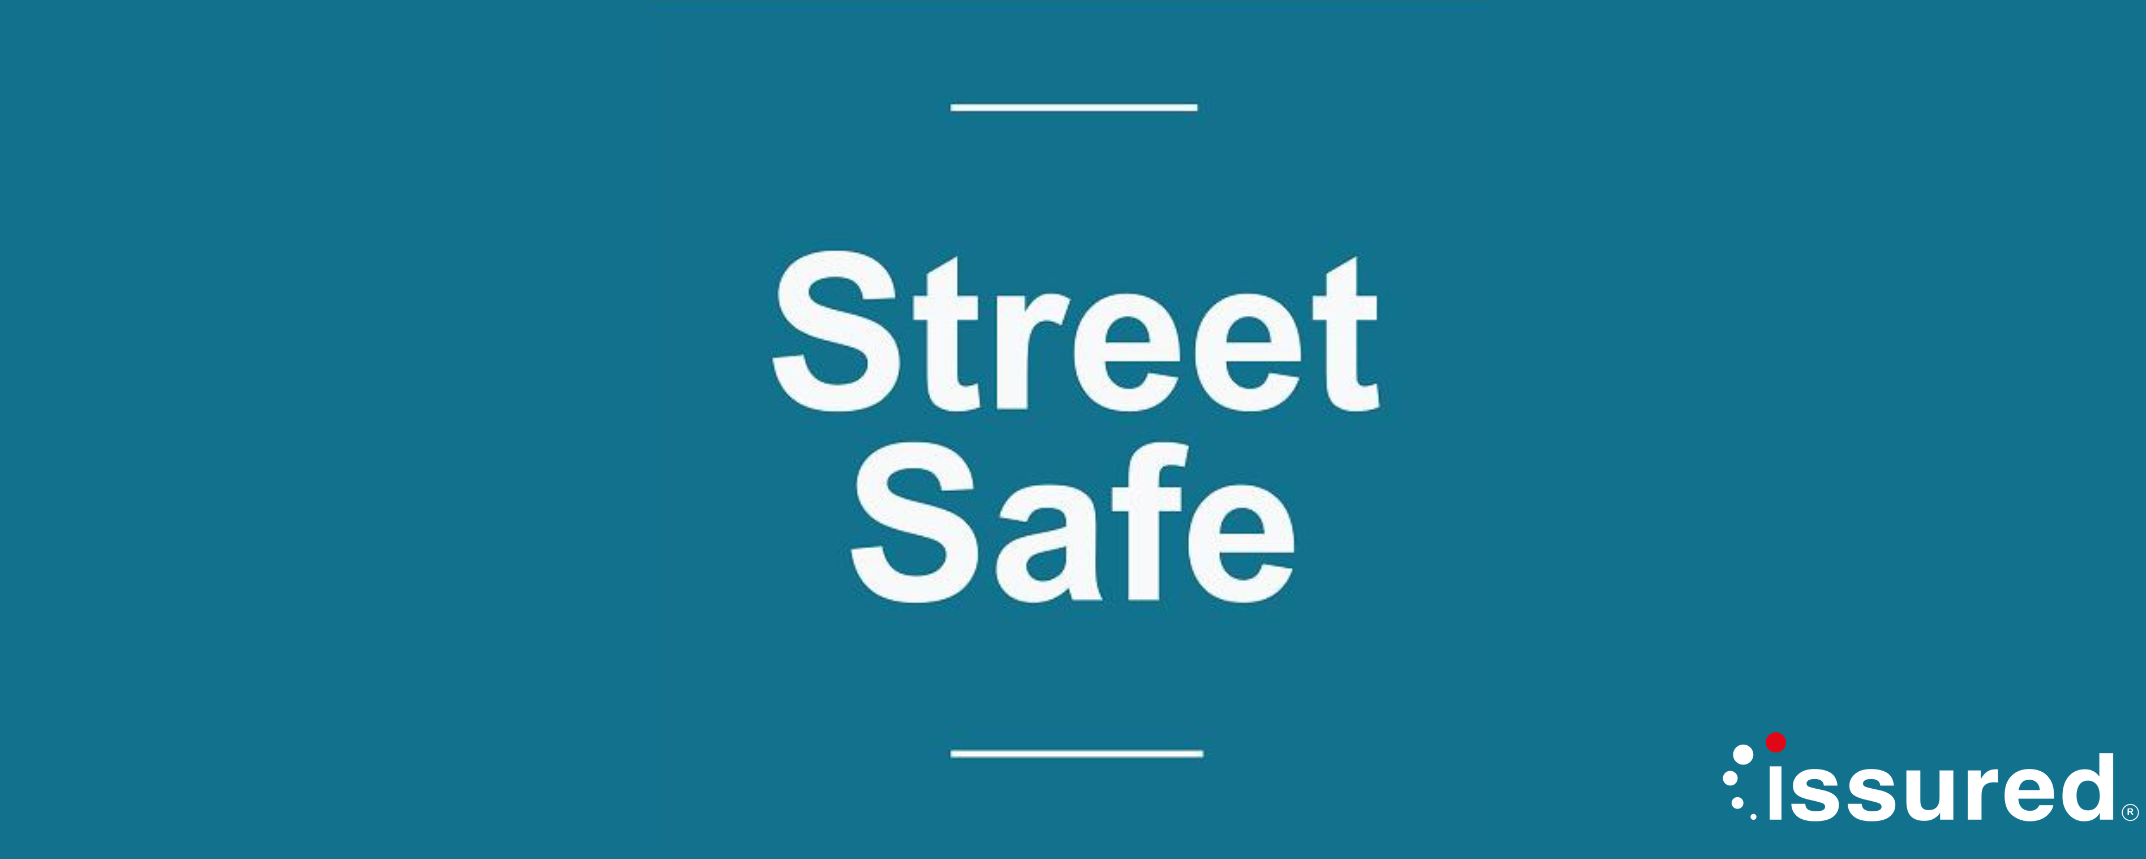 StreetSafe Mobile App Is Now Live | Digital Transformation Specialists | Issured Ltd